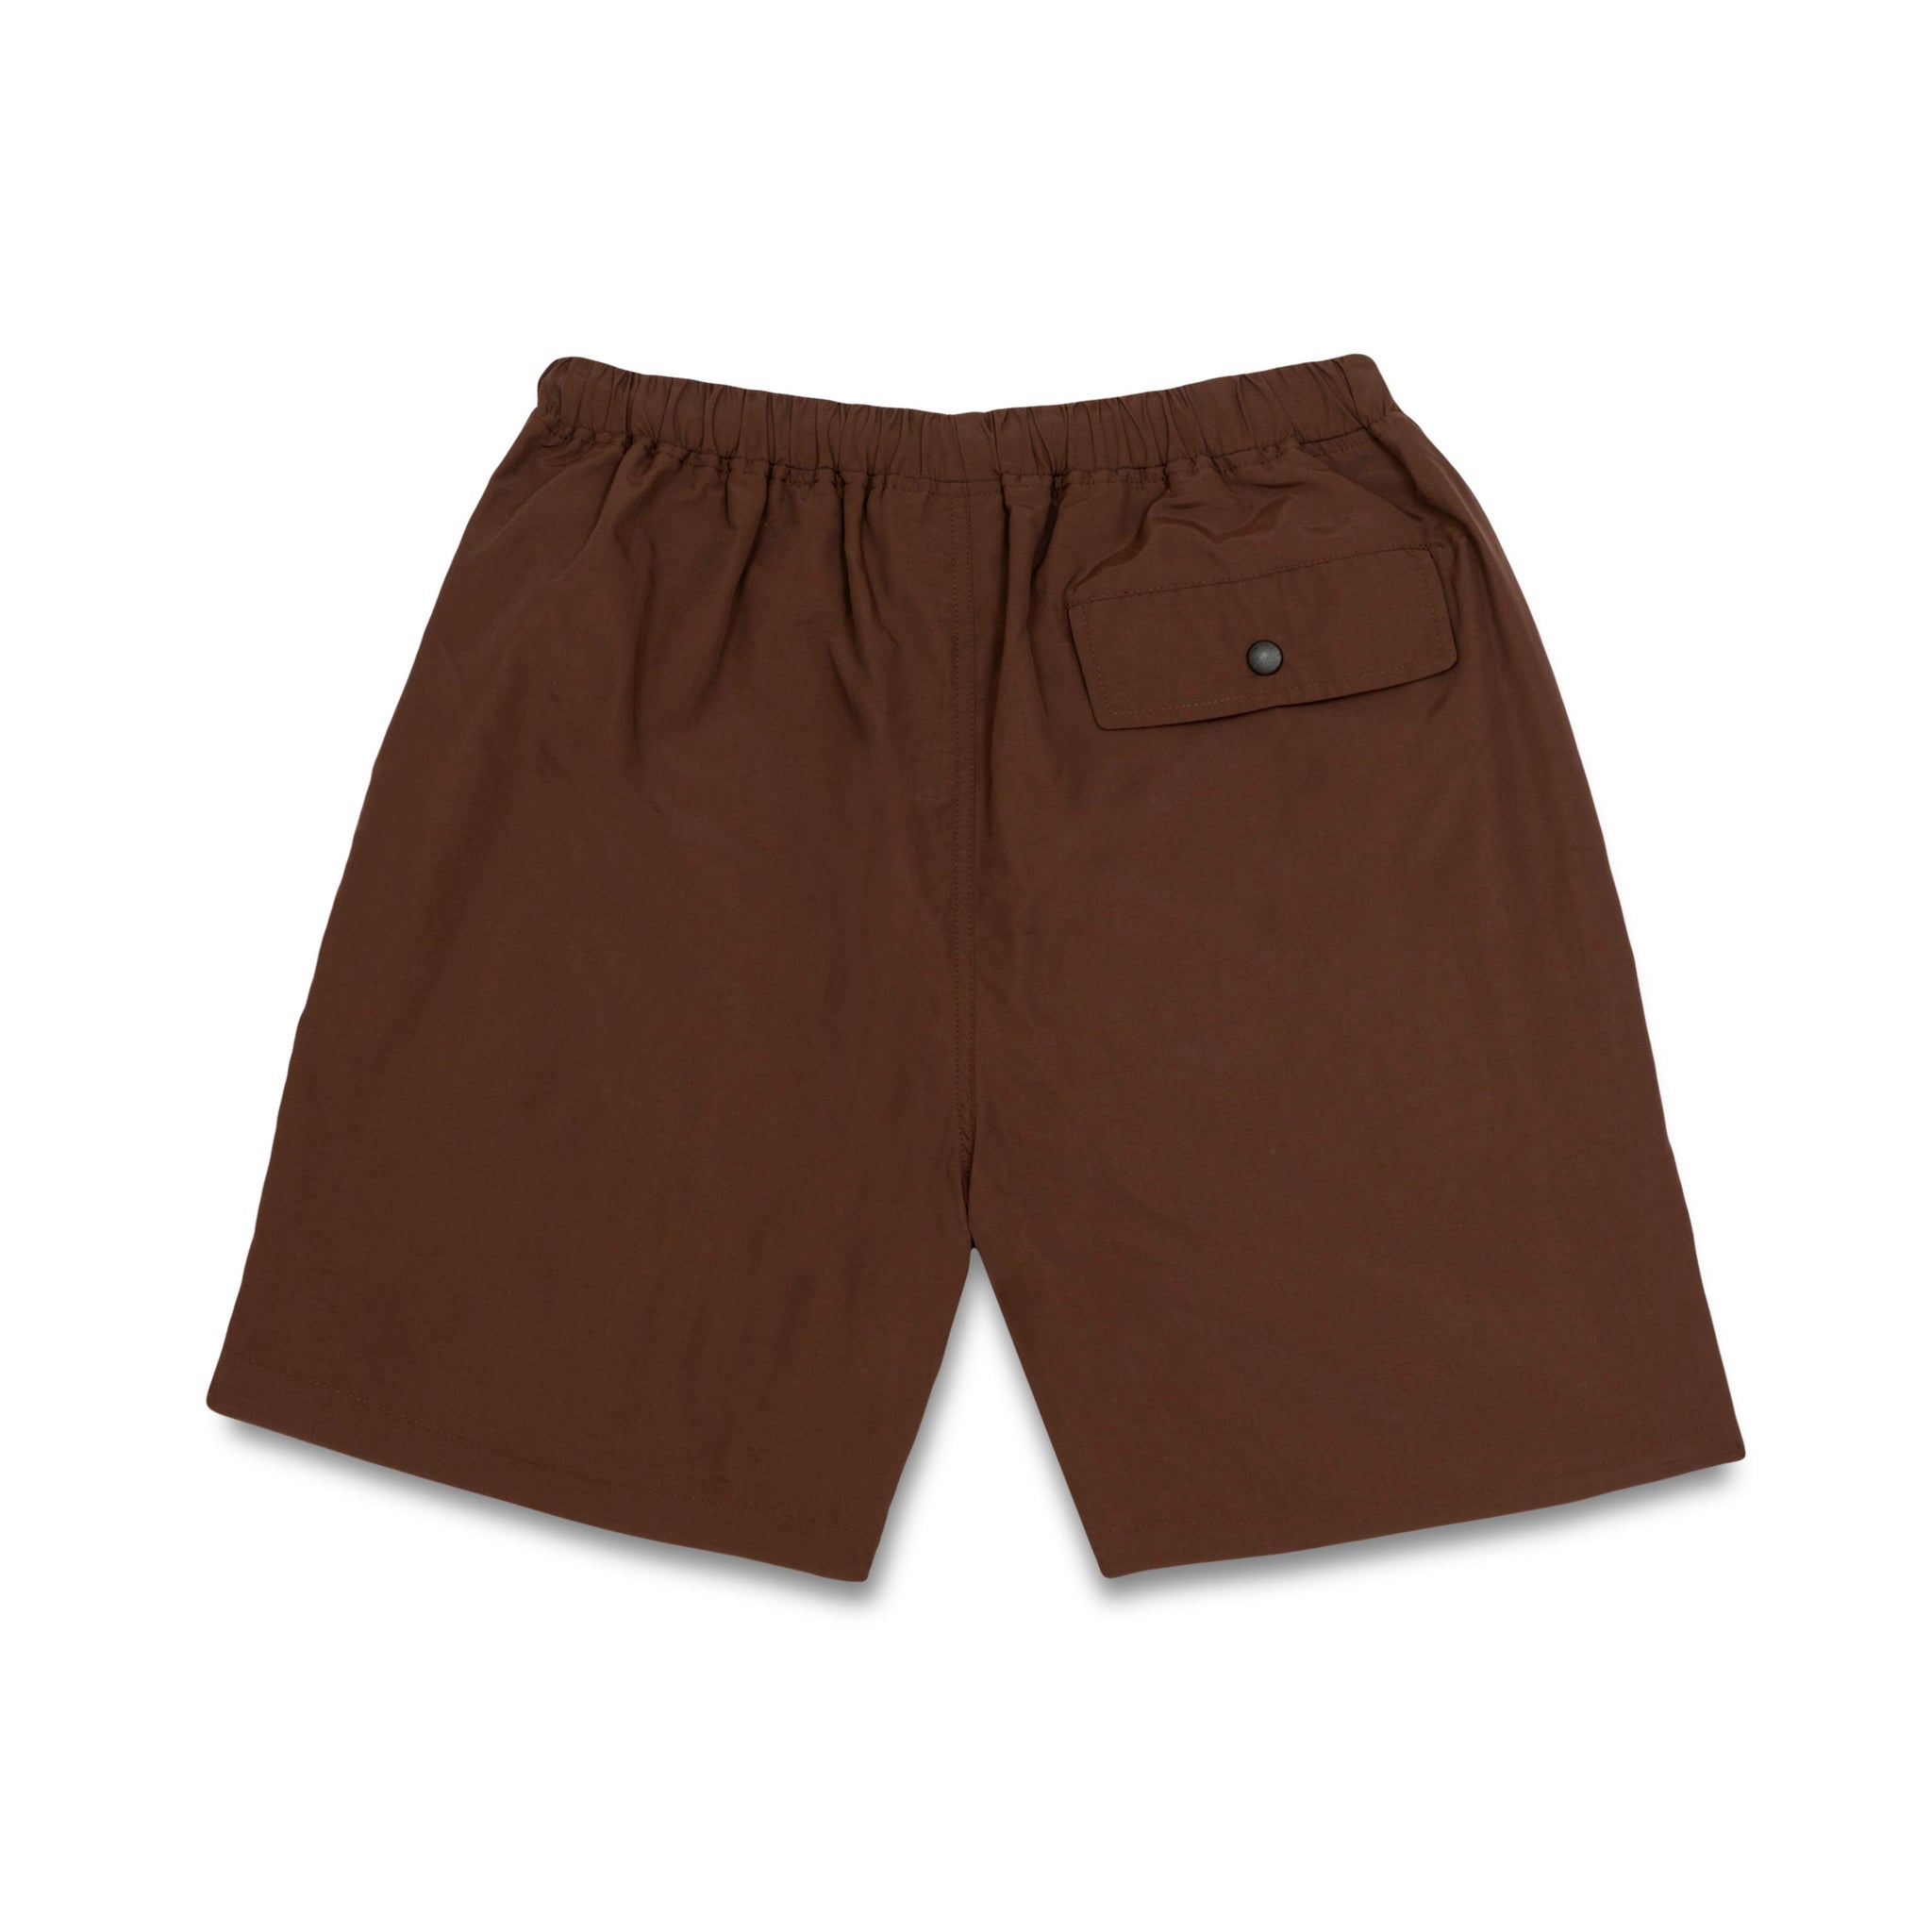 QUARTERSNACKS  - Hiking Shorts "Brown"